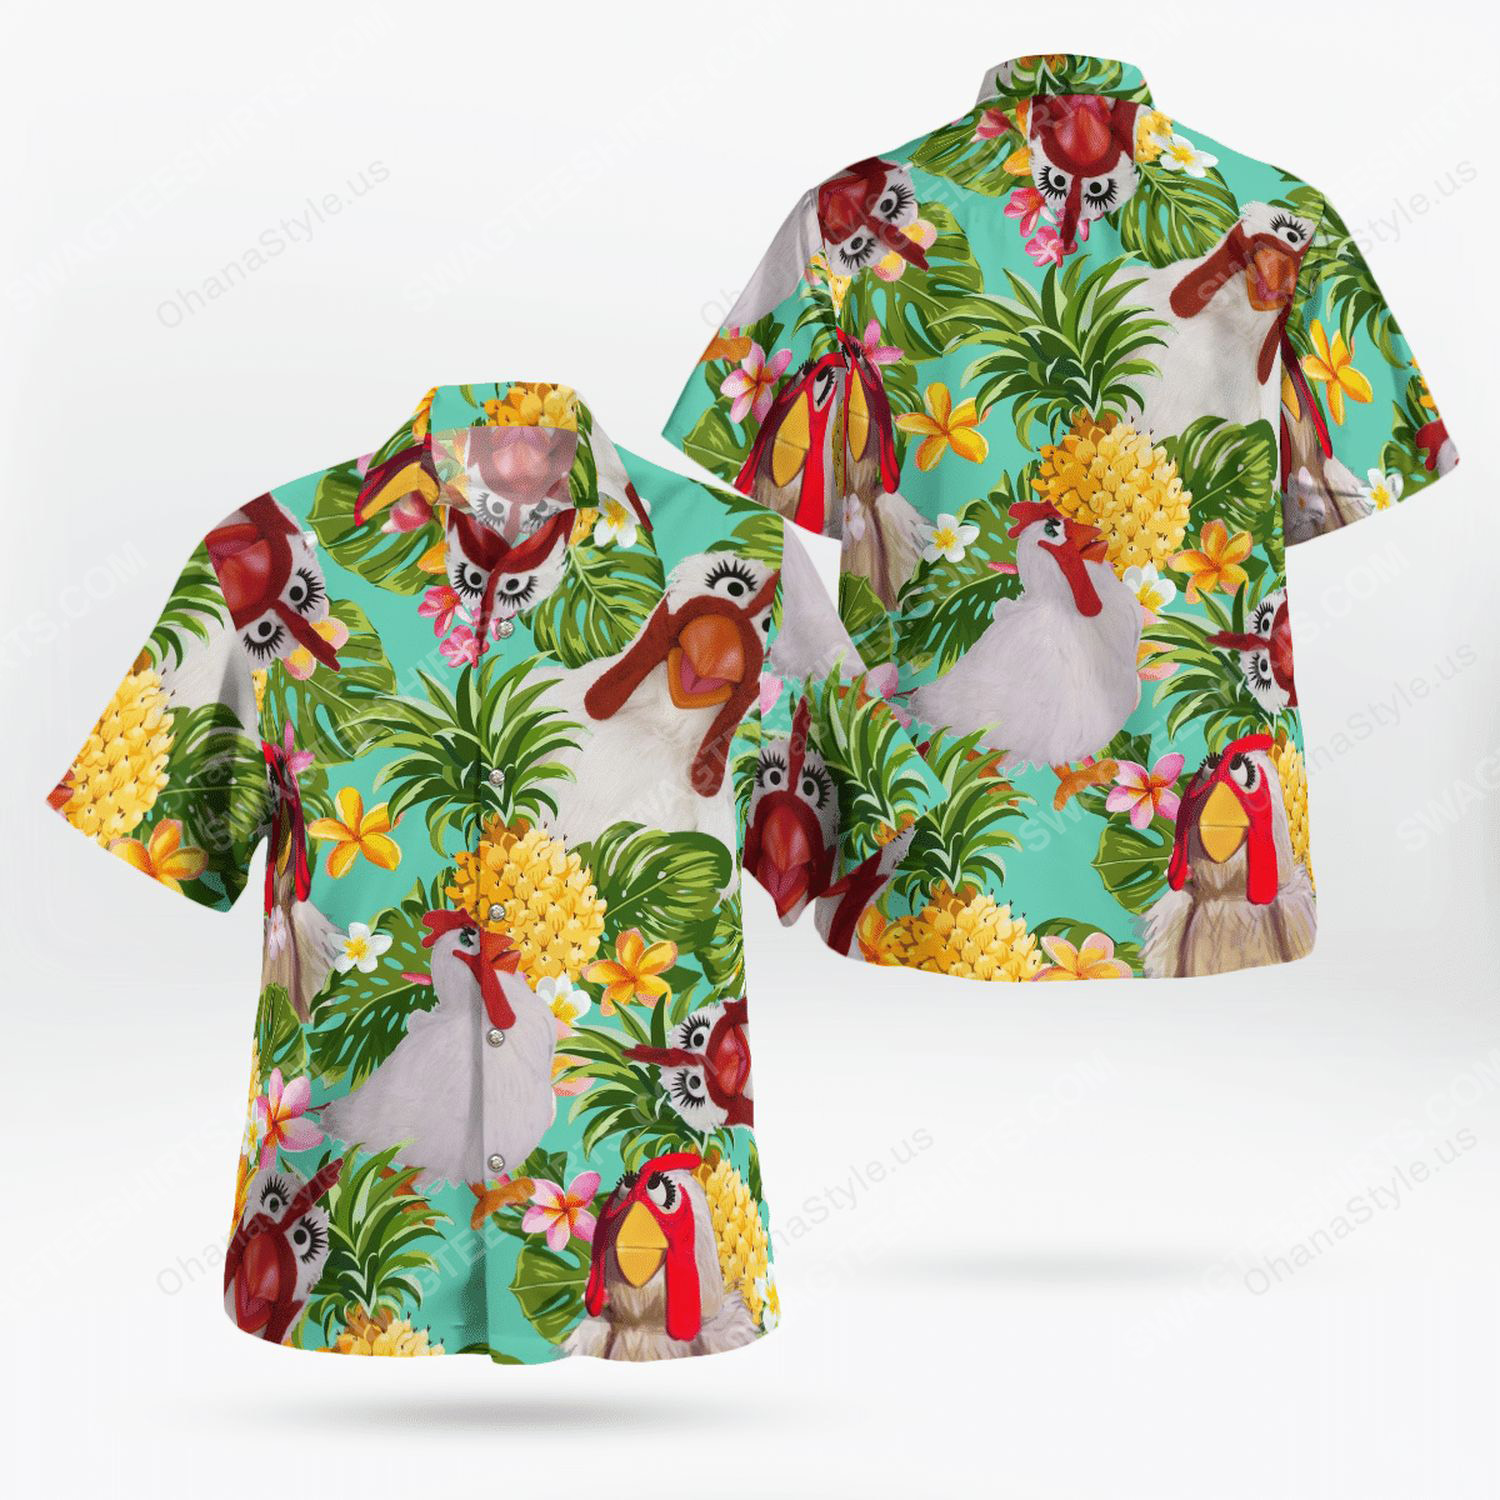 The muppet show camilla the chicken hawaiian shirt 1